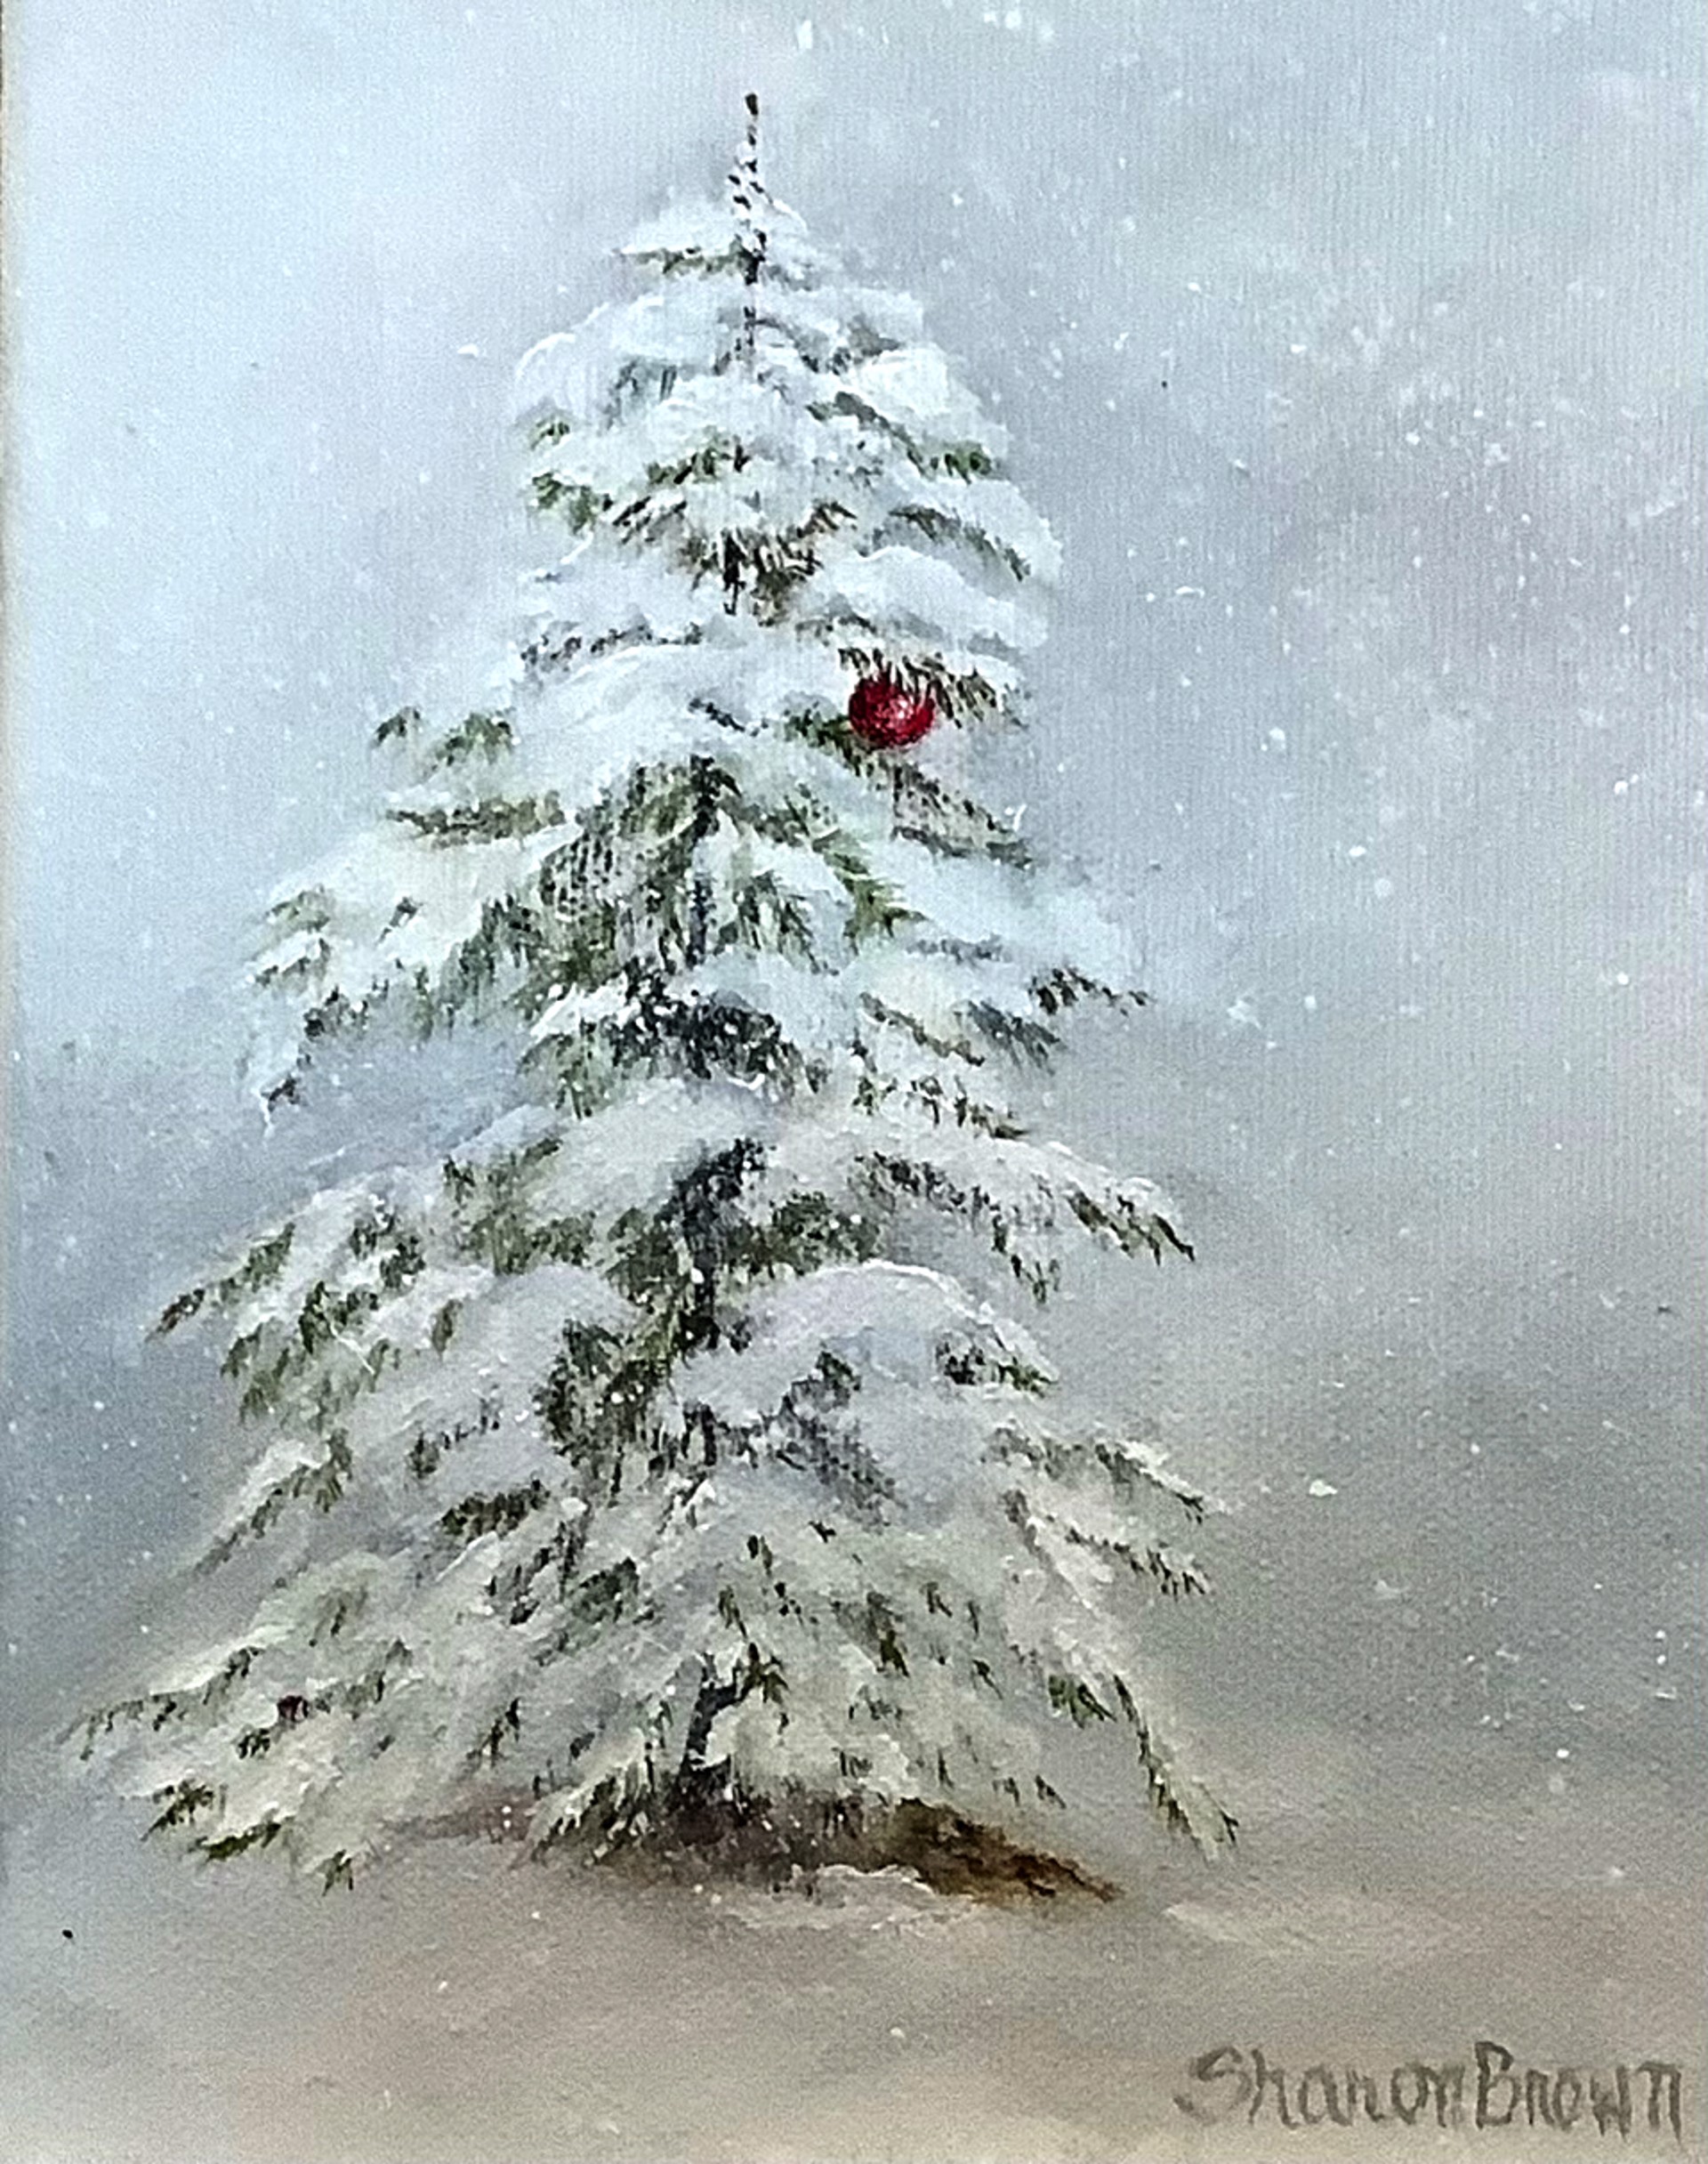 Overnight Snowfall by Sharon Brown